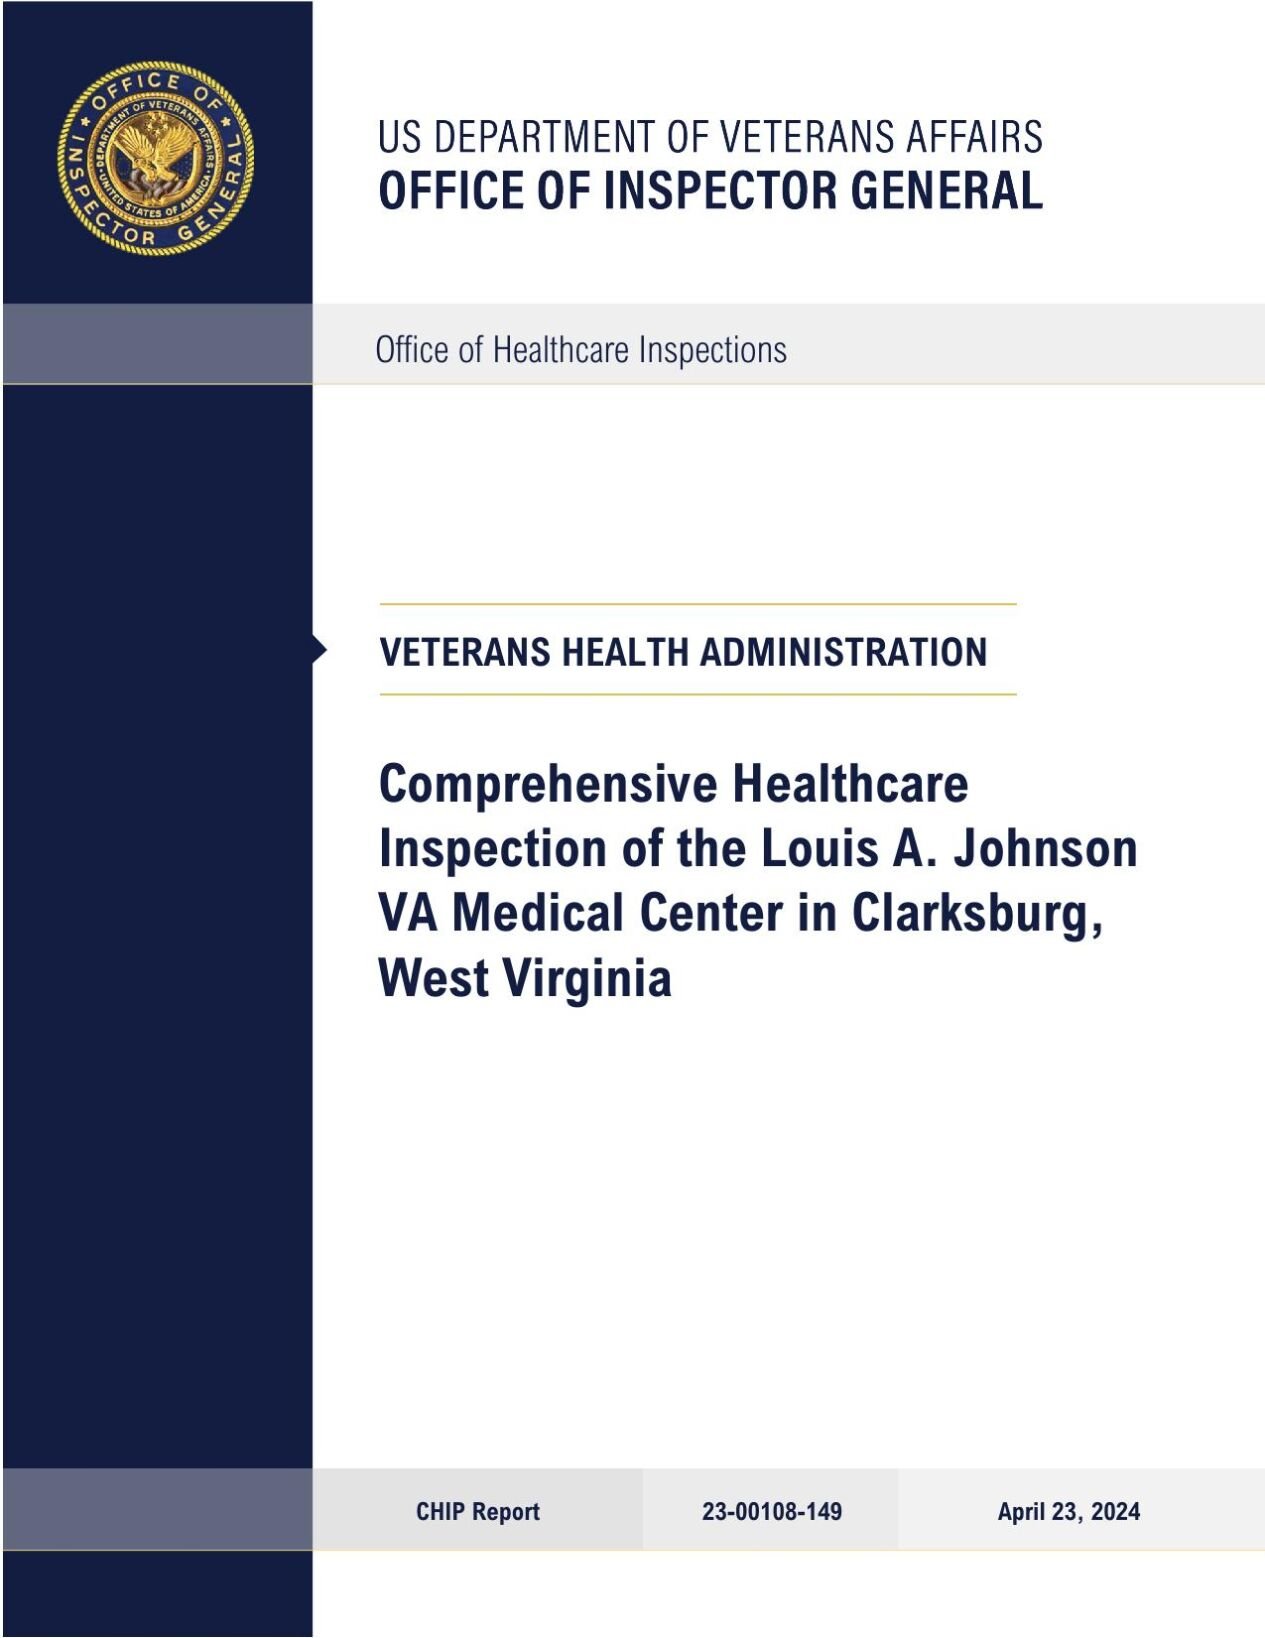 VA OIG report on visit to Louis A. Johnson VA Medical Center